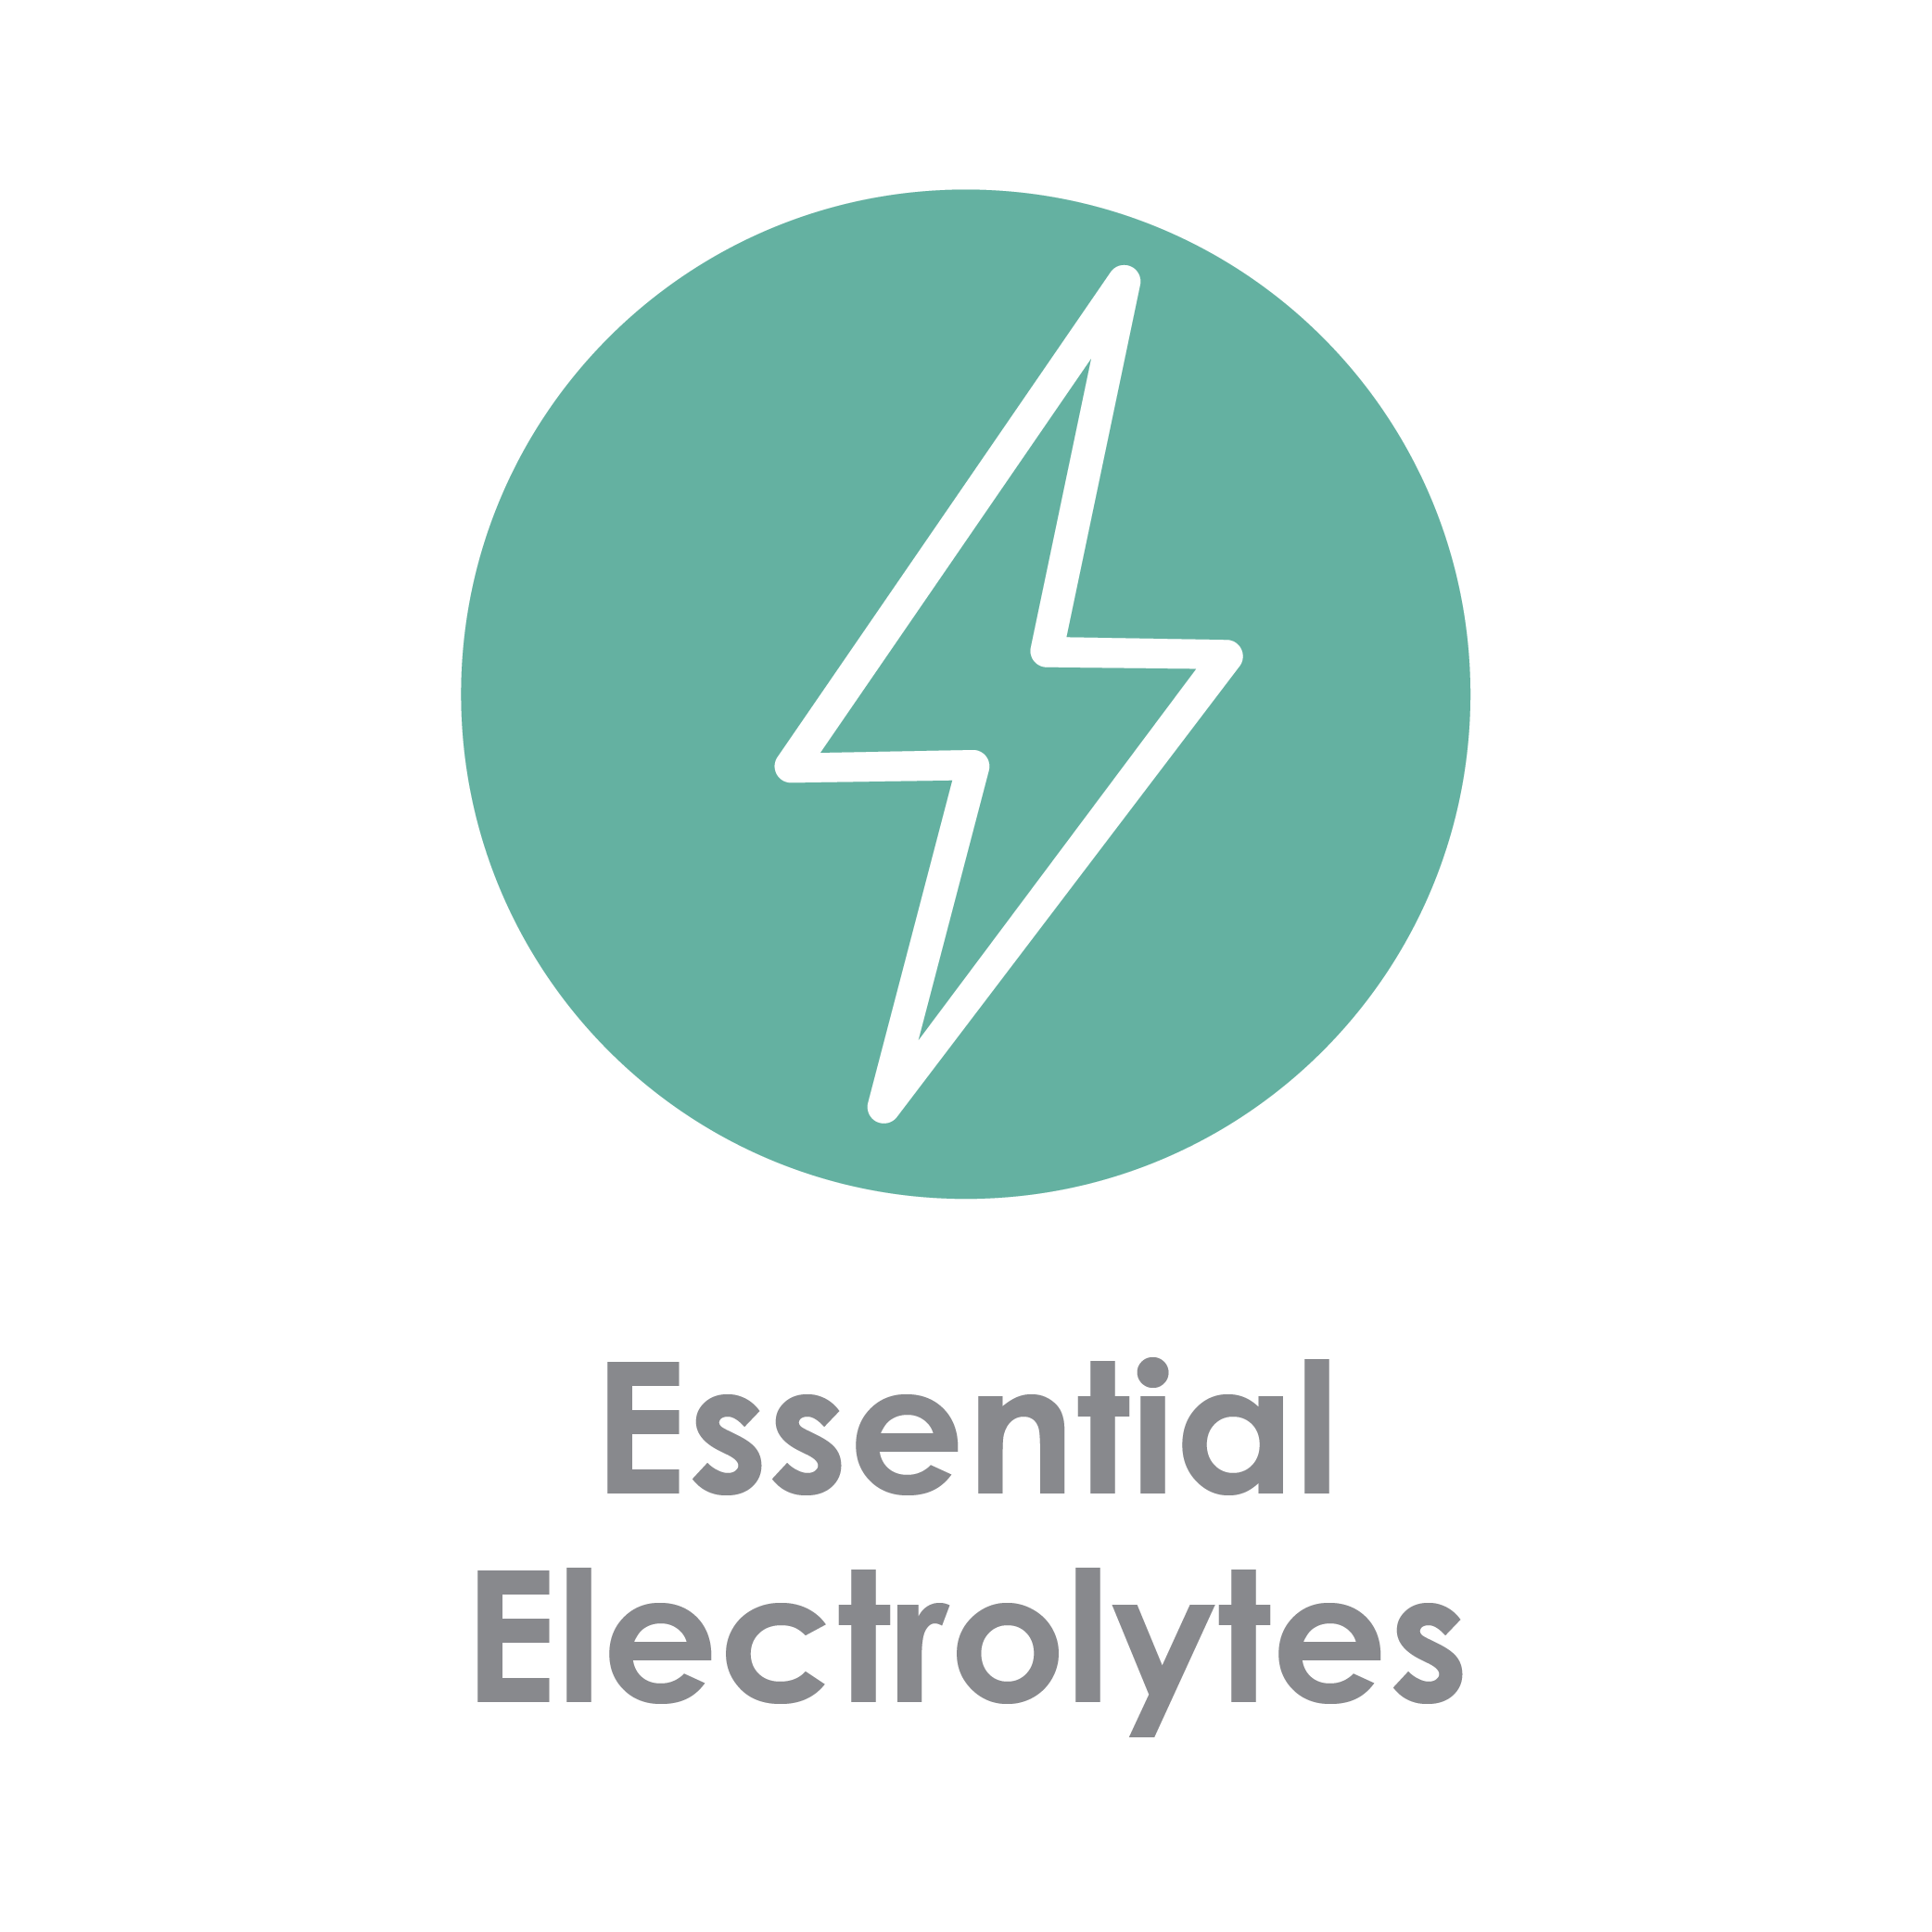 Essential Electrolytes